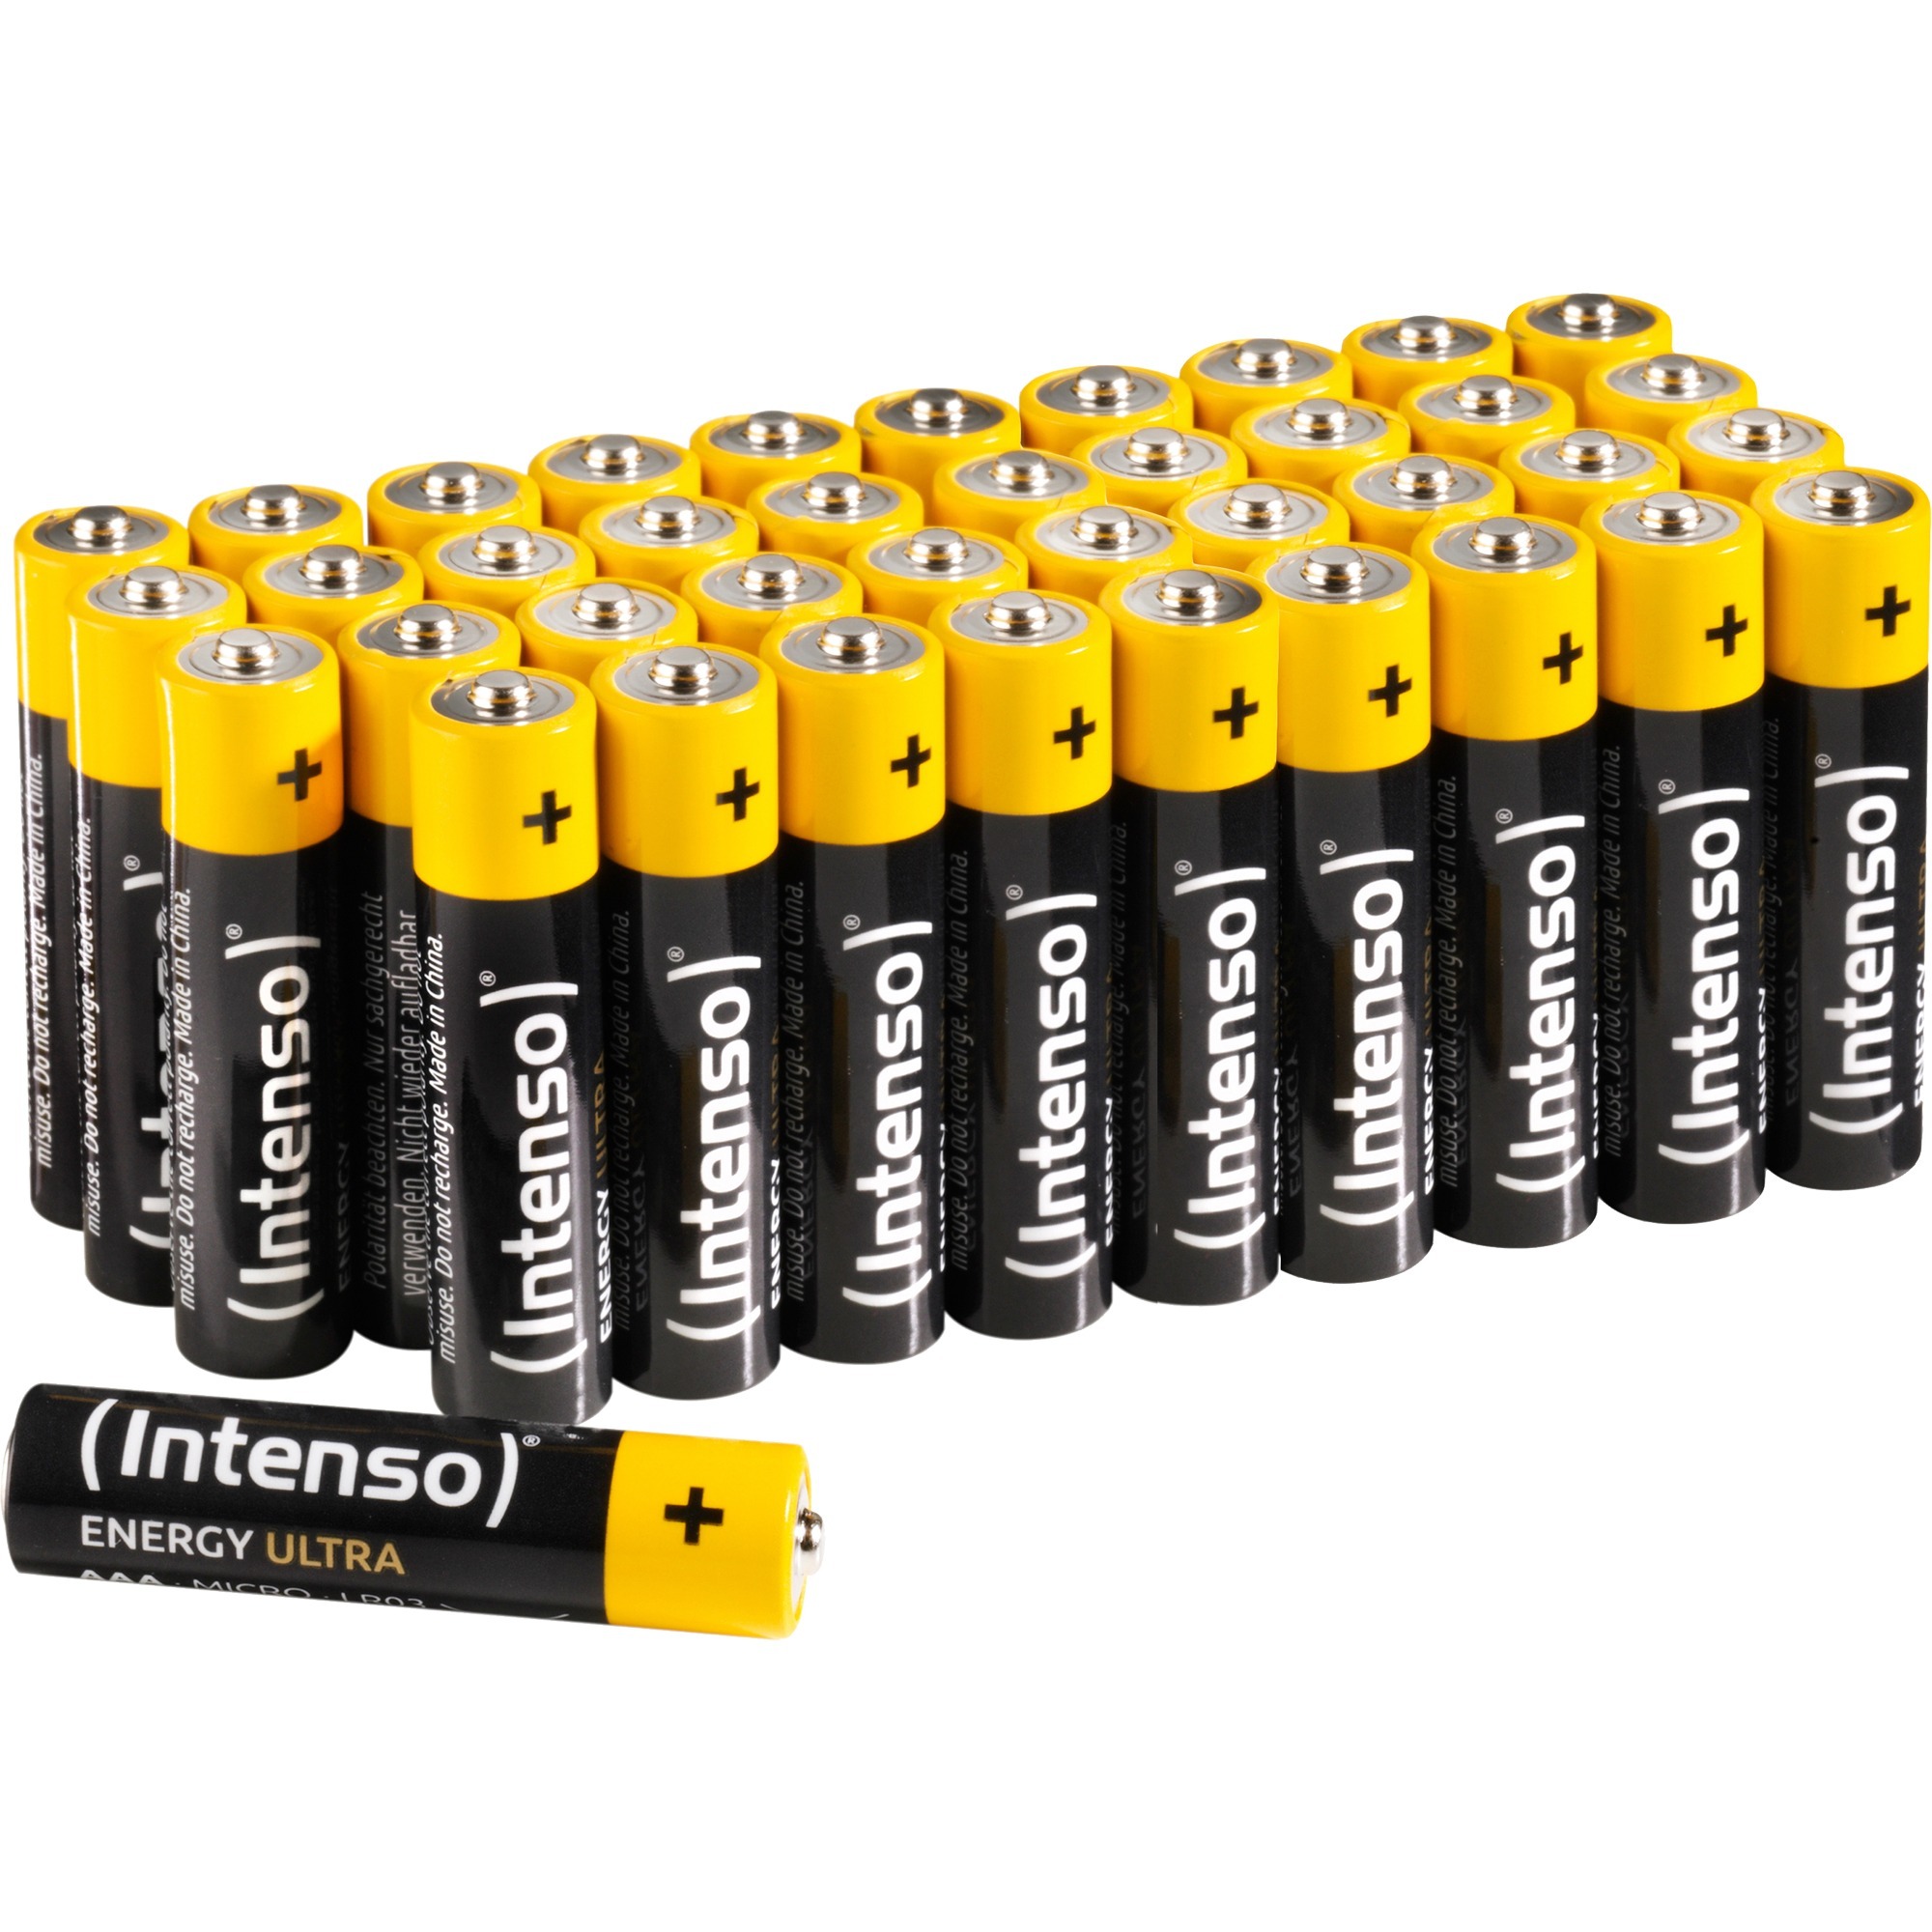 Image of Alternate - Energy Ultra AAA - LR03, Batterie online einkaufen bei Alternate